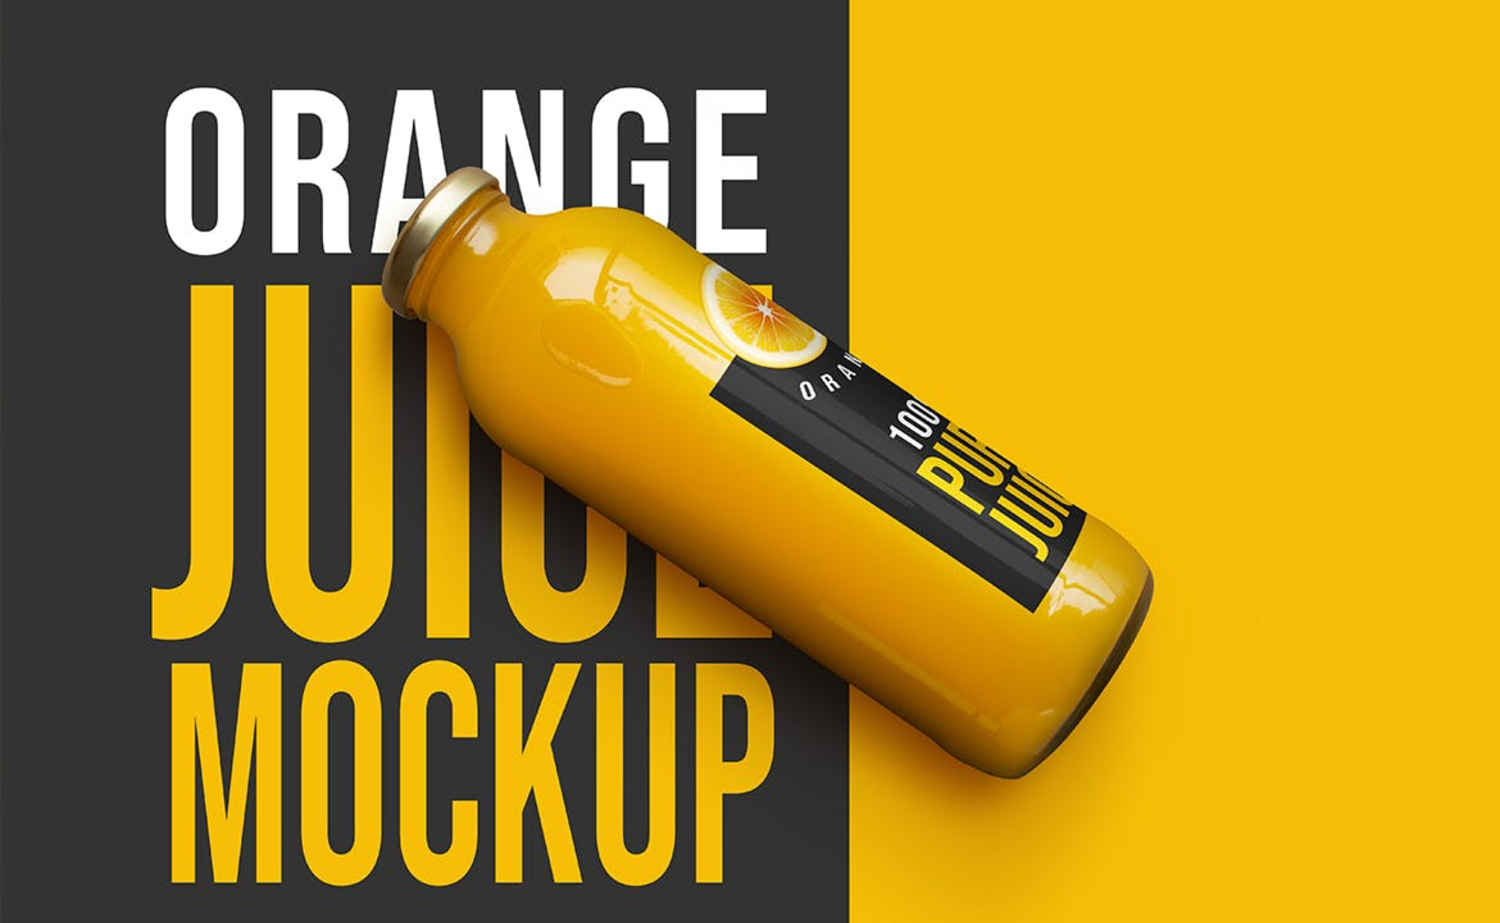 30 鲜橙果肉背景橙汁PV瓶包装设计样机 Orange Juice Bottle Mockup